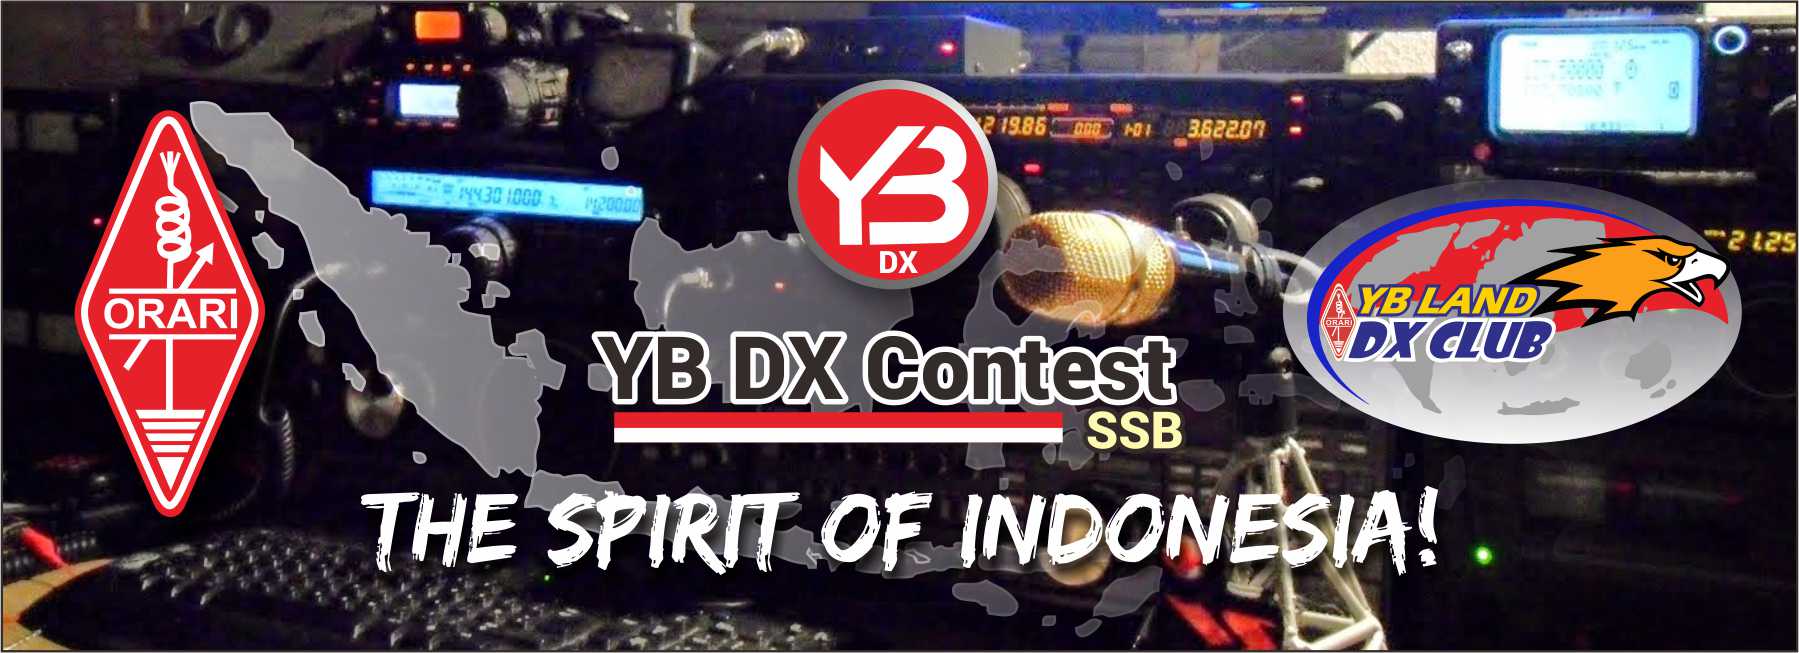 Invitation to participate from ORARI headquarters: YB DX Contest 2018